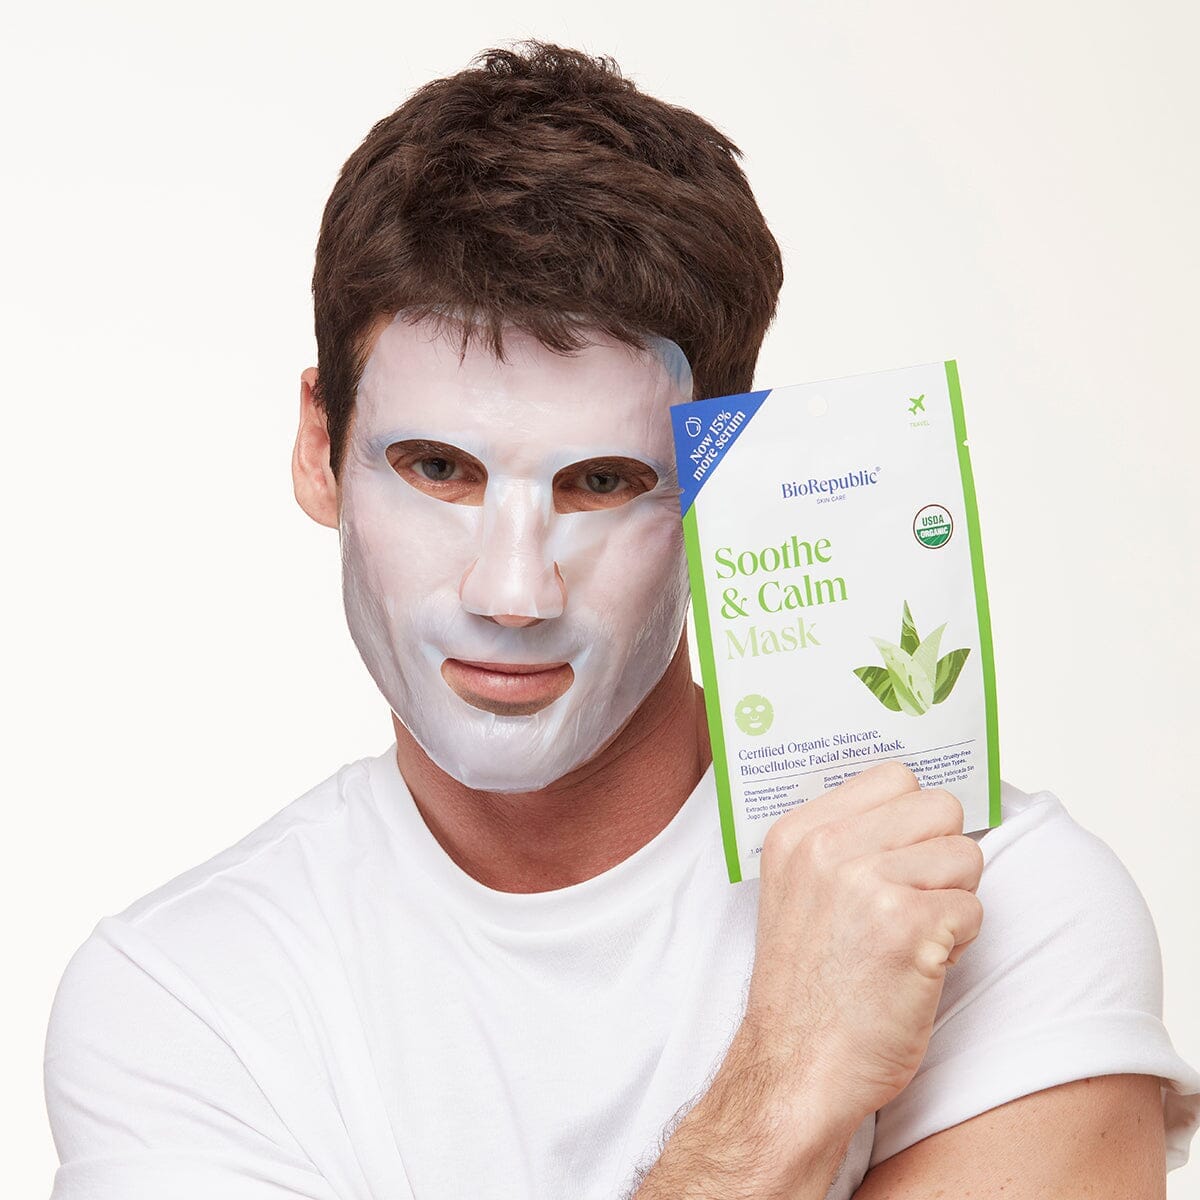 Soothe and Calm Organic Facial Sheet Mask Sheet Mask BioRepublic 